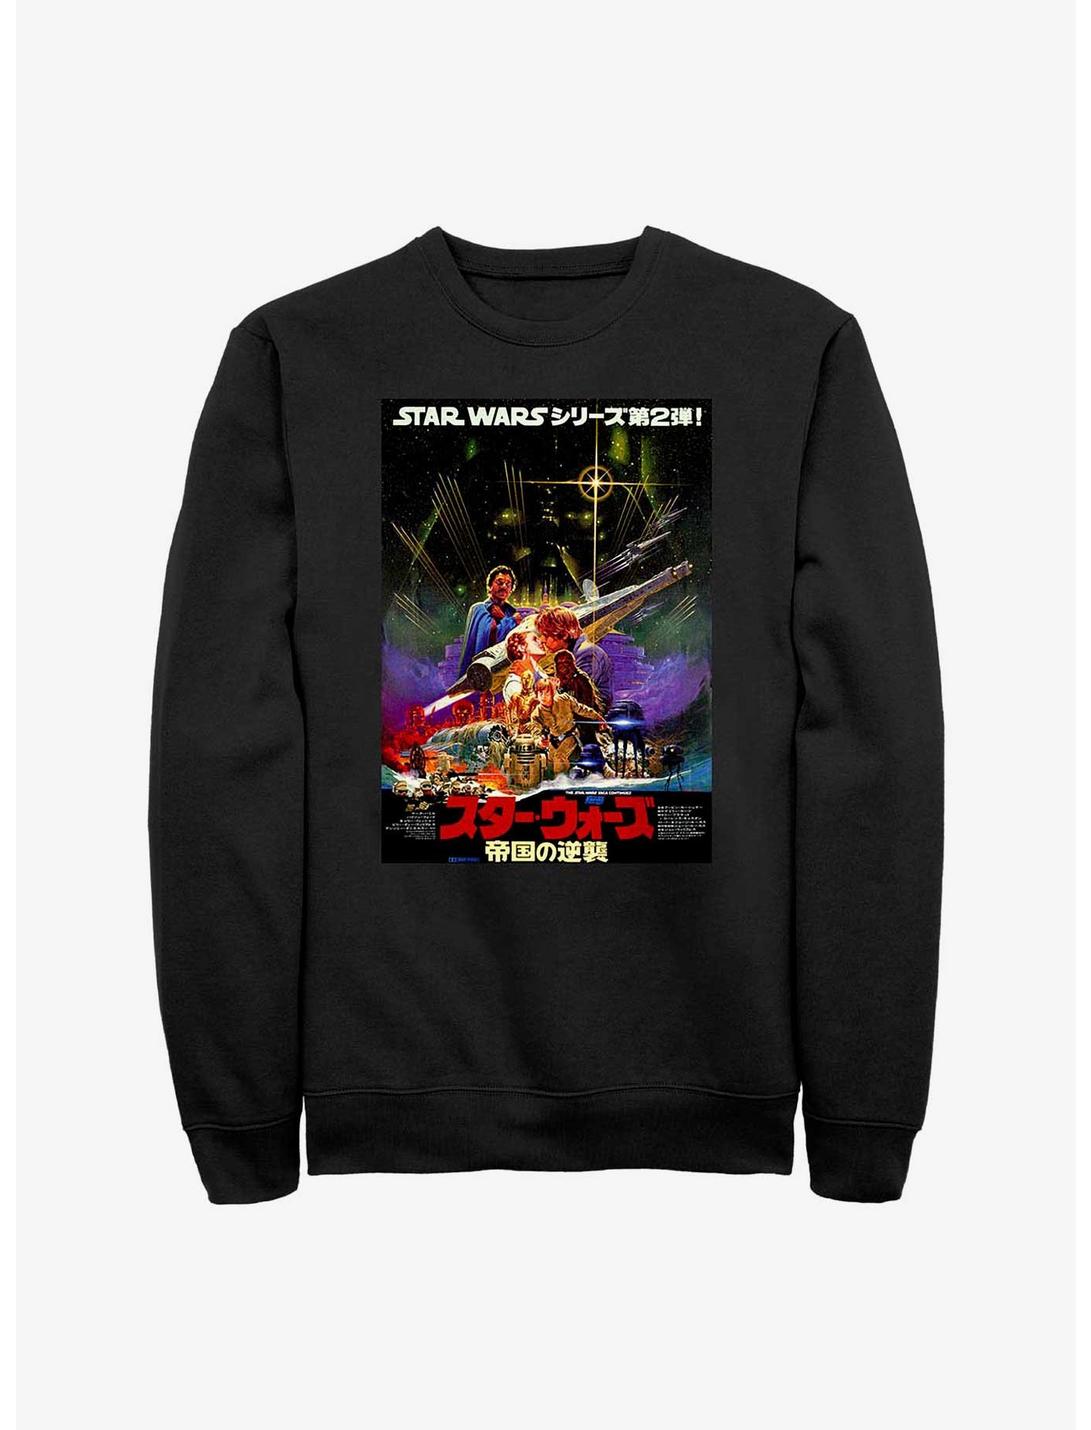 Star Wars Kanji Poster Empire Strikes Back Sweatshirt, BLACK, hi-res